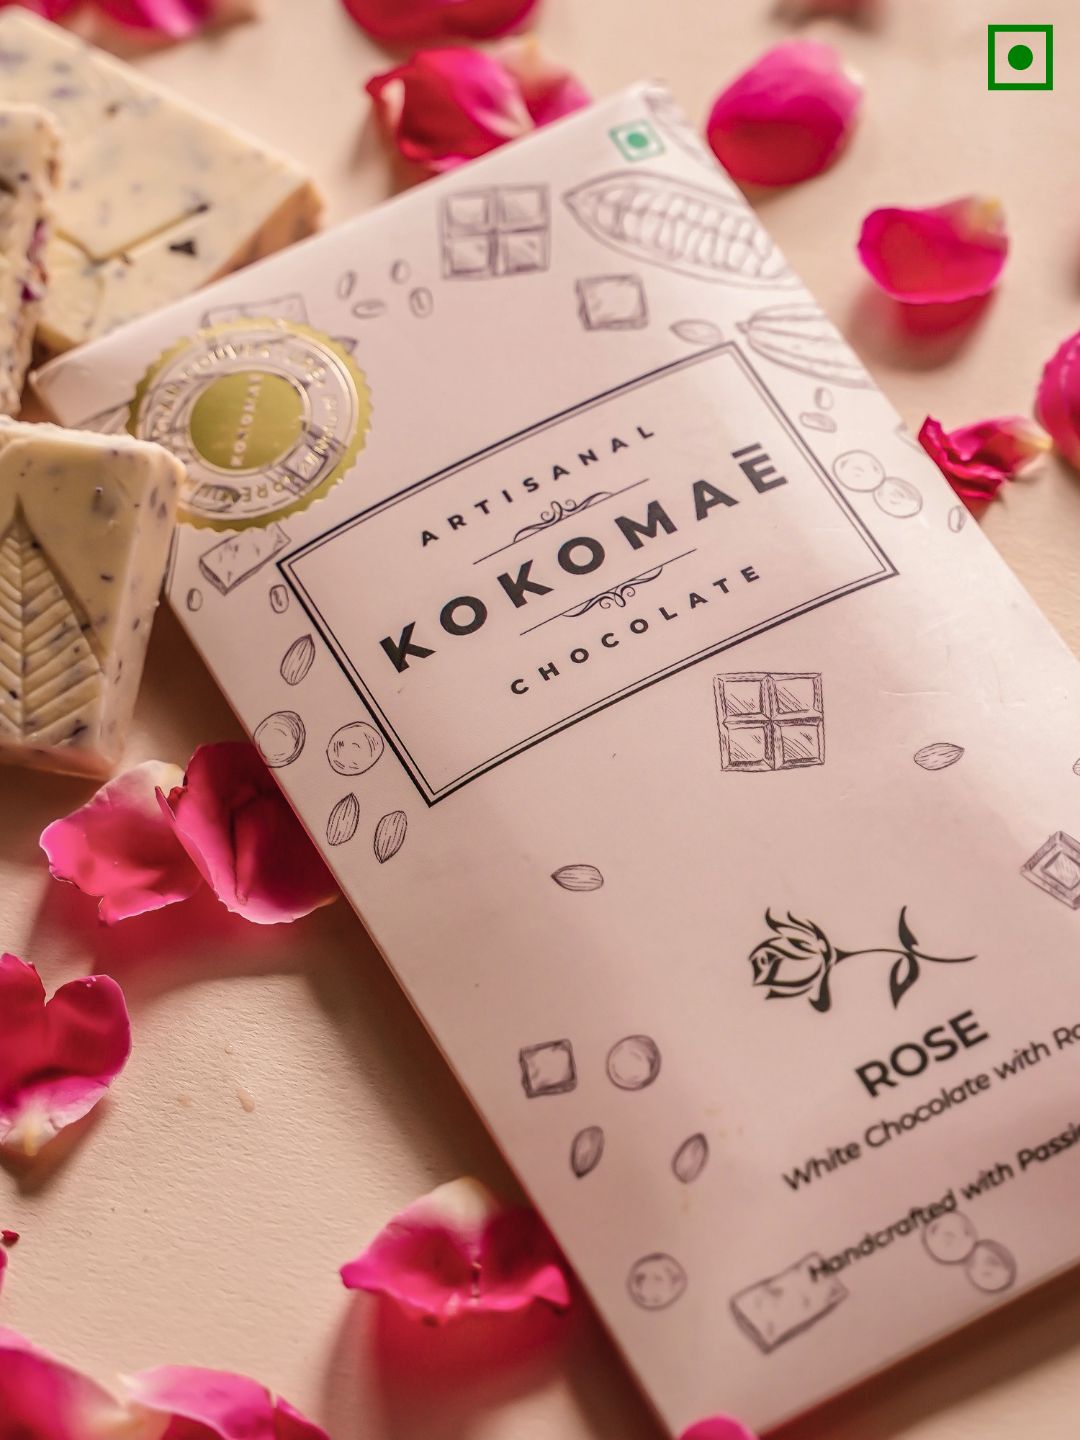 Kokomaē Gift Hamper with Premium Belgian Couverture Pack of Five Exquisite Flavors Handmade with Natural & Premium Ingredients like Rose, Saffron, Almond, Orange Peel & Chilli